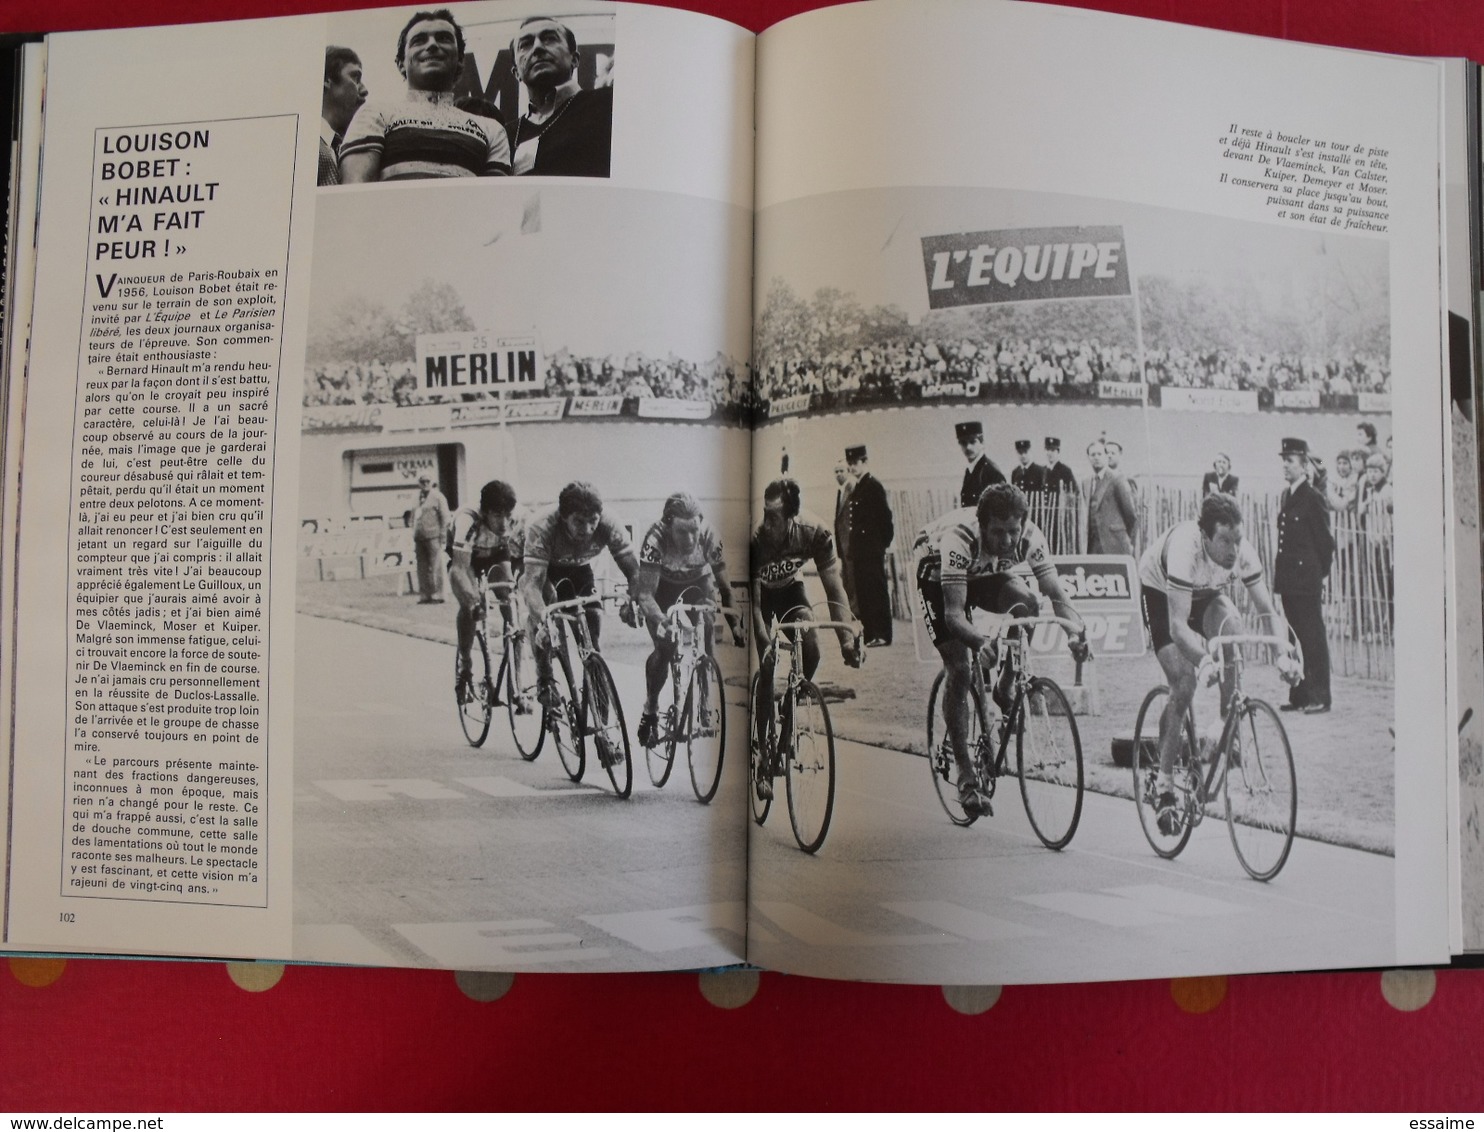 l'année du cyclisme 1981. Pierre Chany. hinault zoetemelk thévenet moser maertens moser raas saronni kuiper